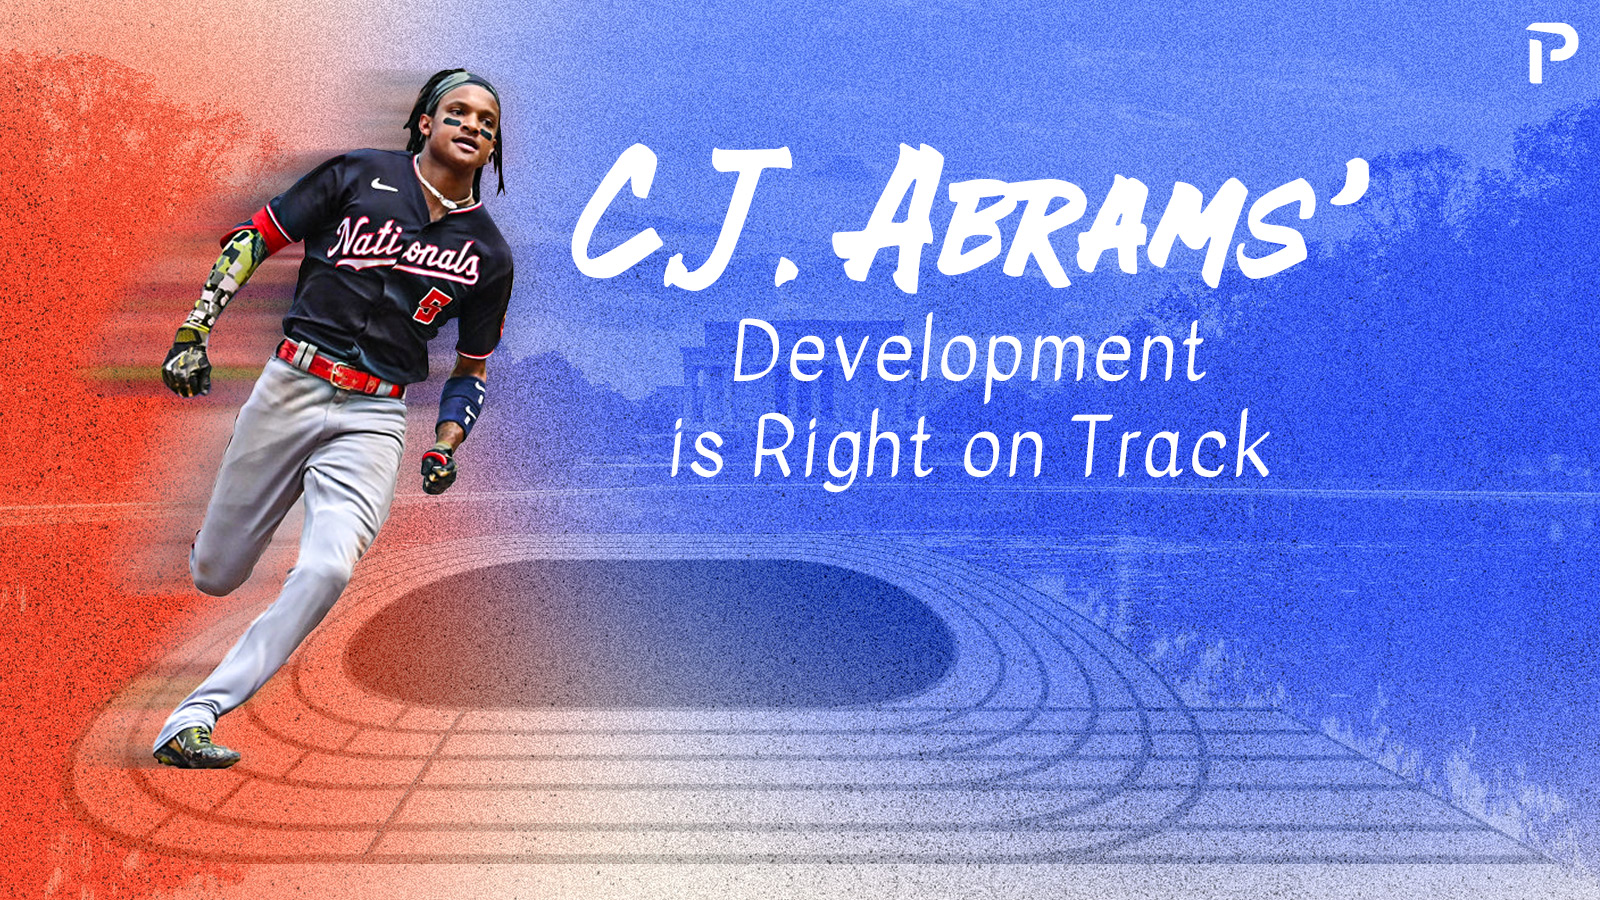 CJ Abrams' Development is Right on Track